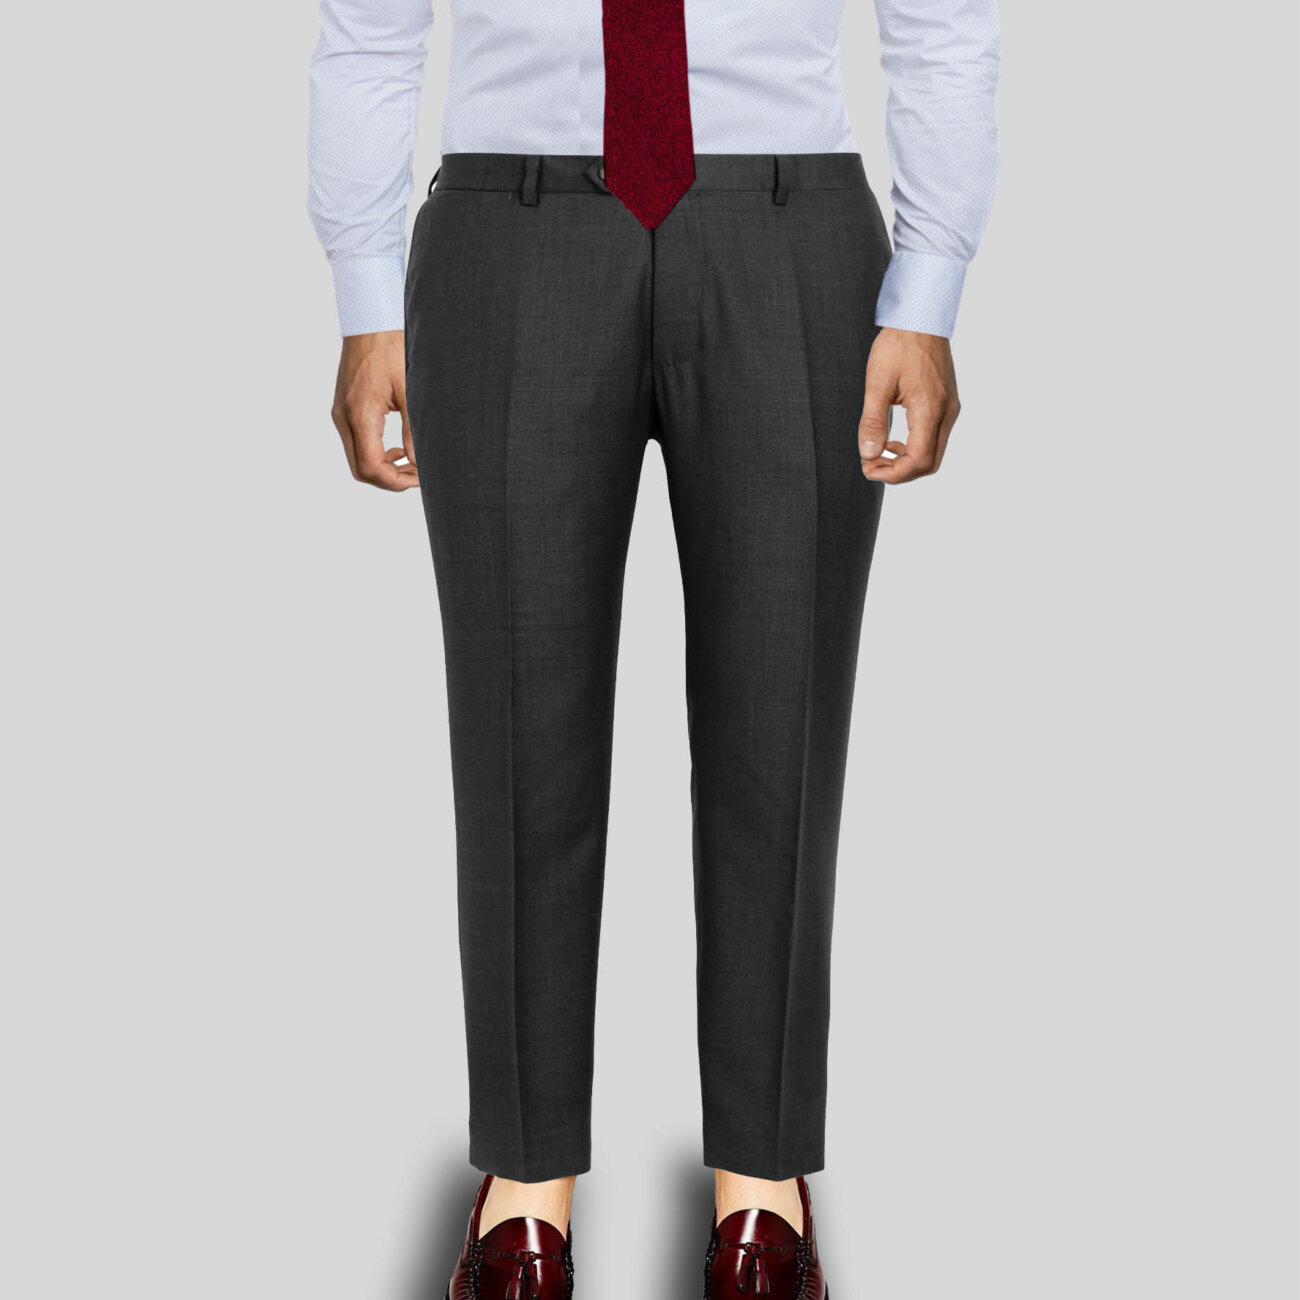 Charcoal Vitale Barberis Pant Premium Italian Wool Suit